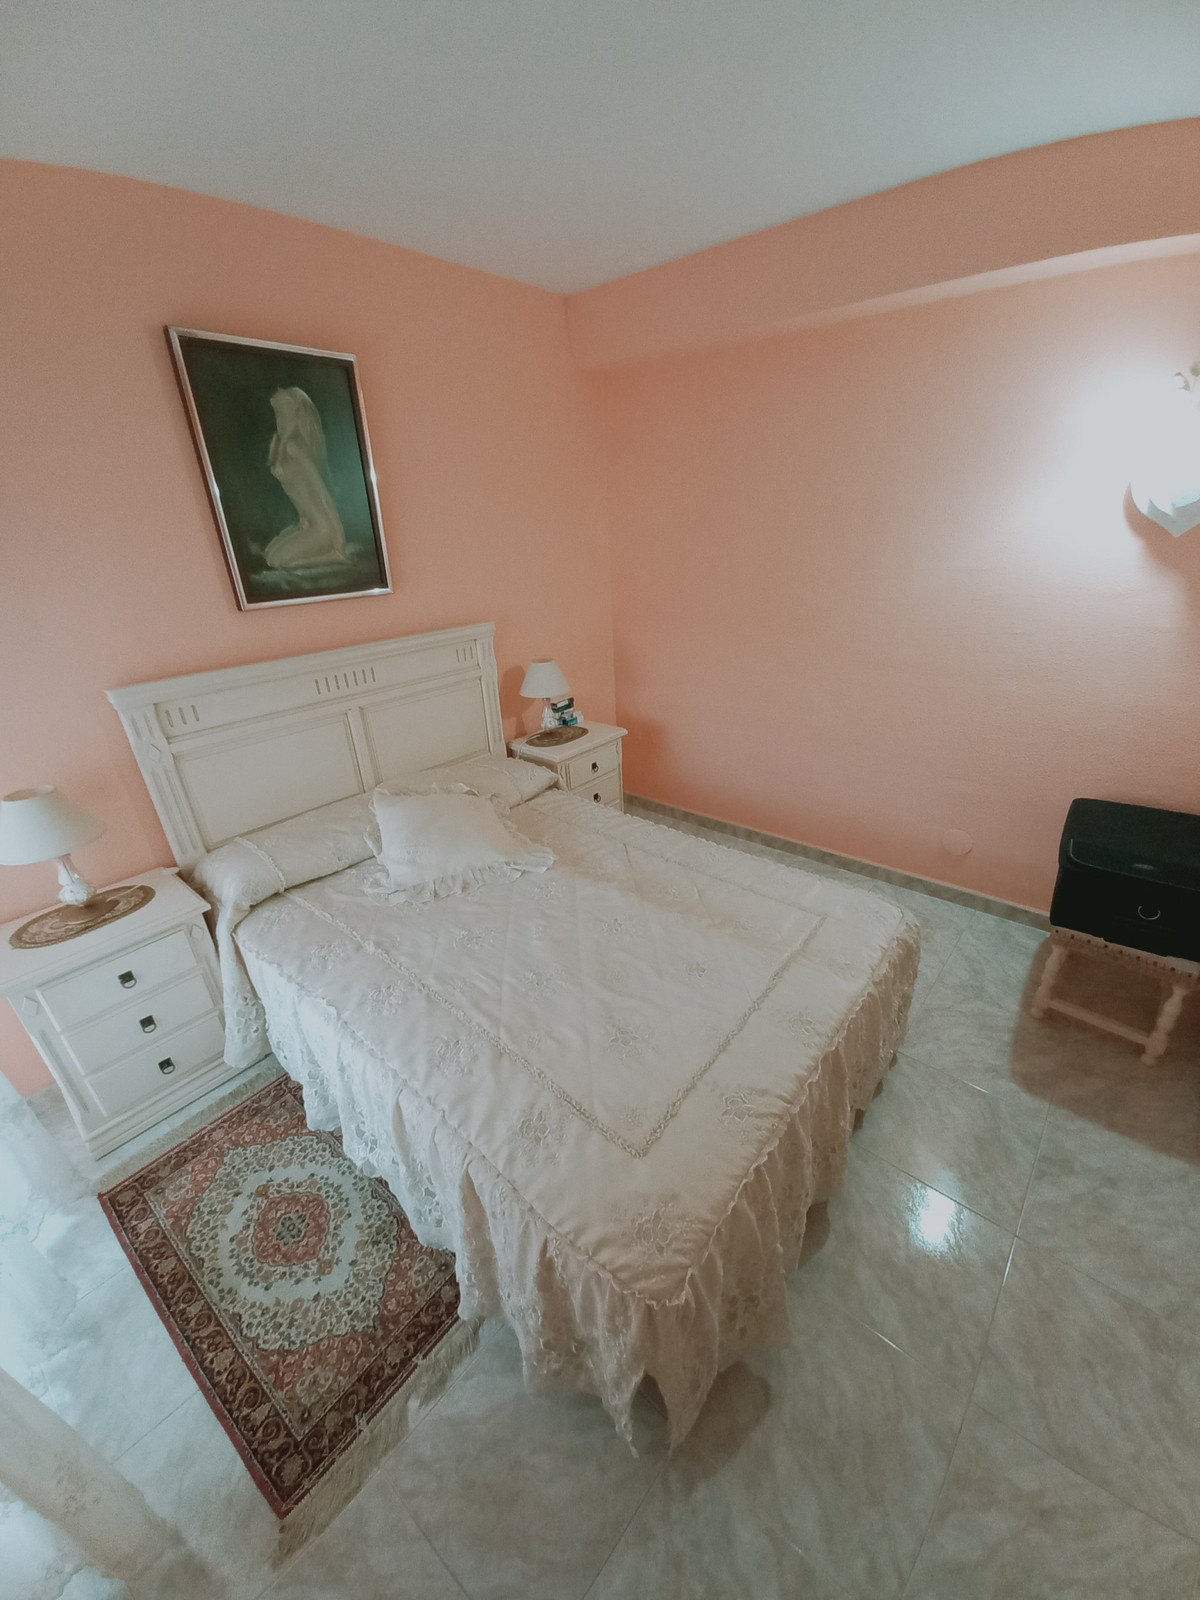 2 bedroom Apartment For Sale in La Campana, Málaga - thumb 5